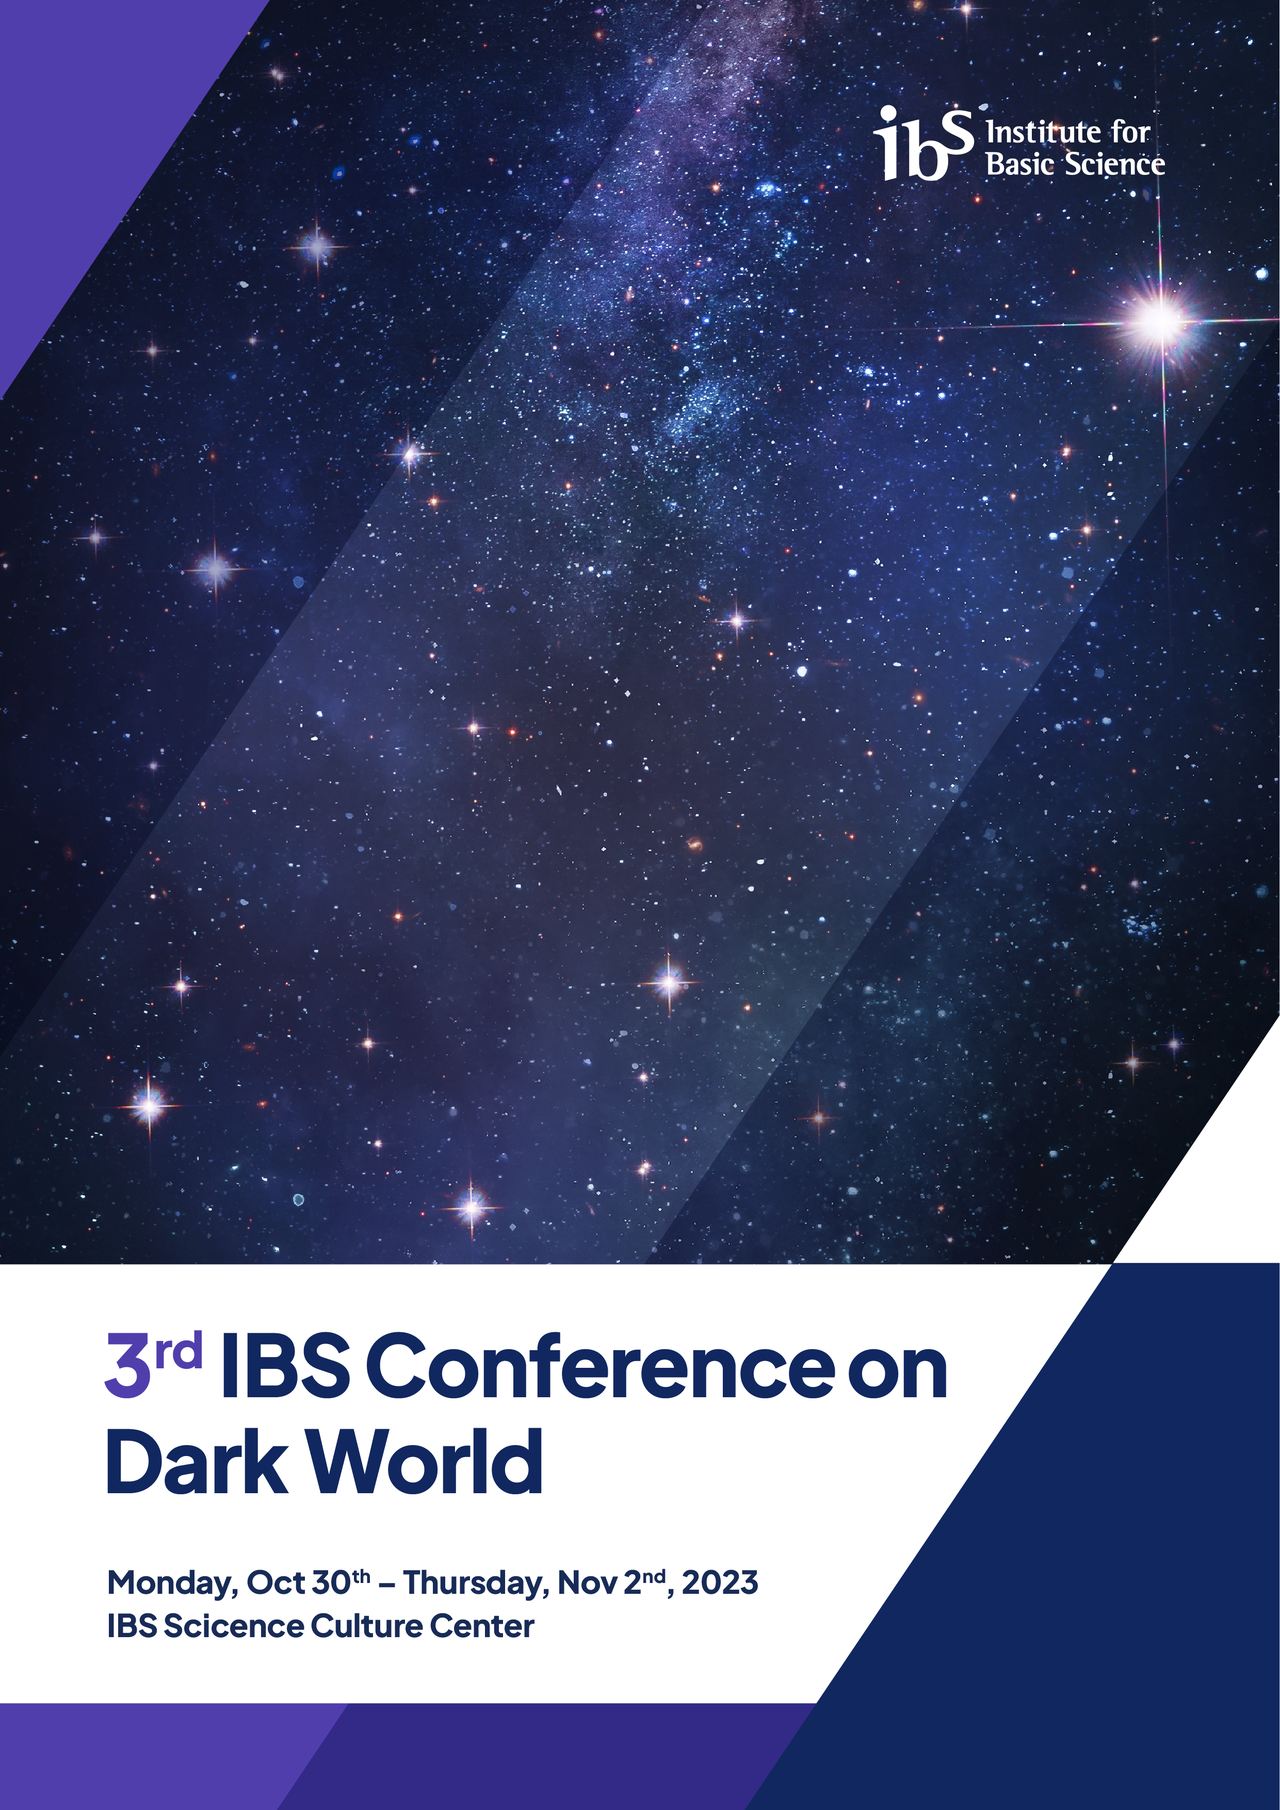 IBS Conference on Dark World 사진